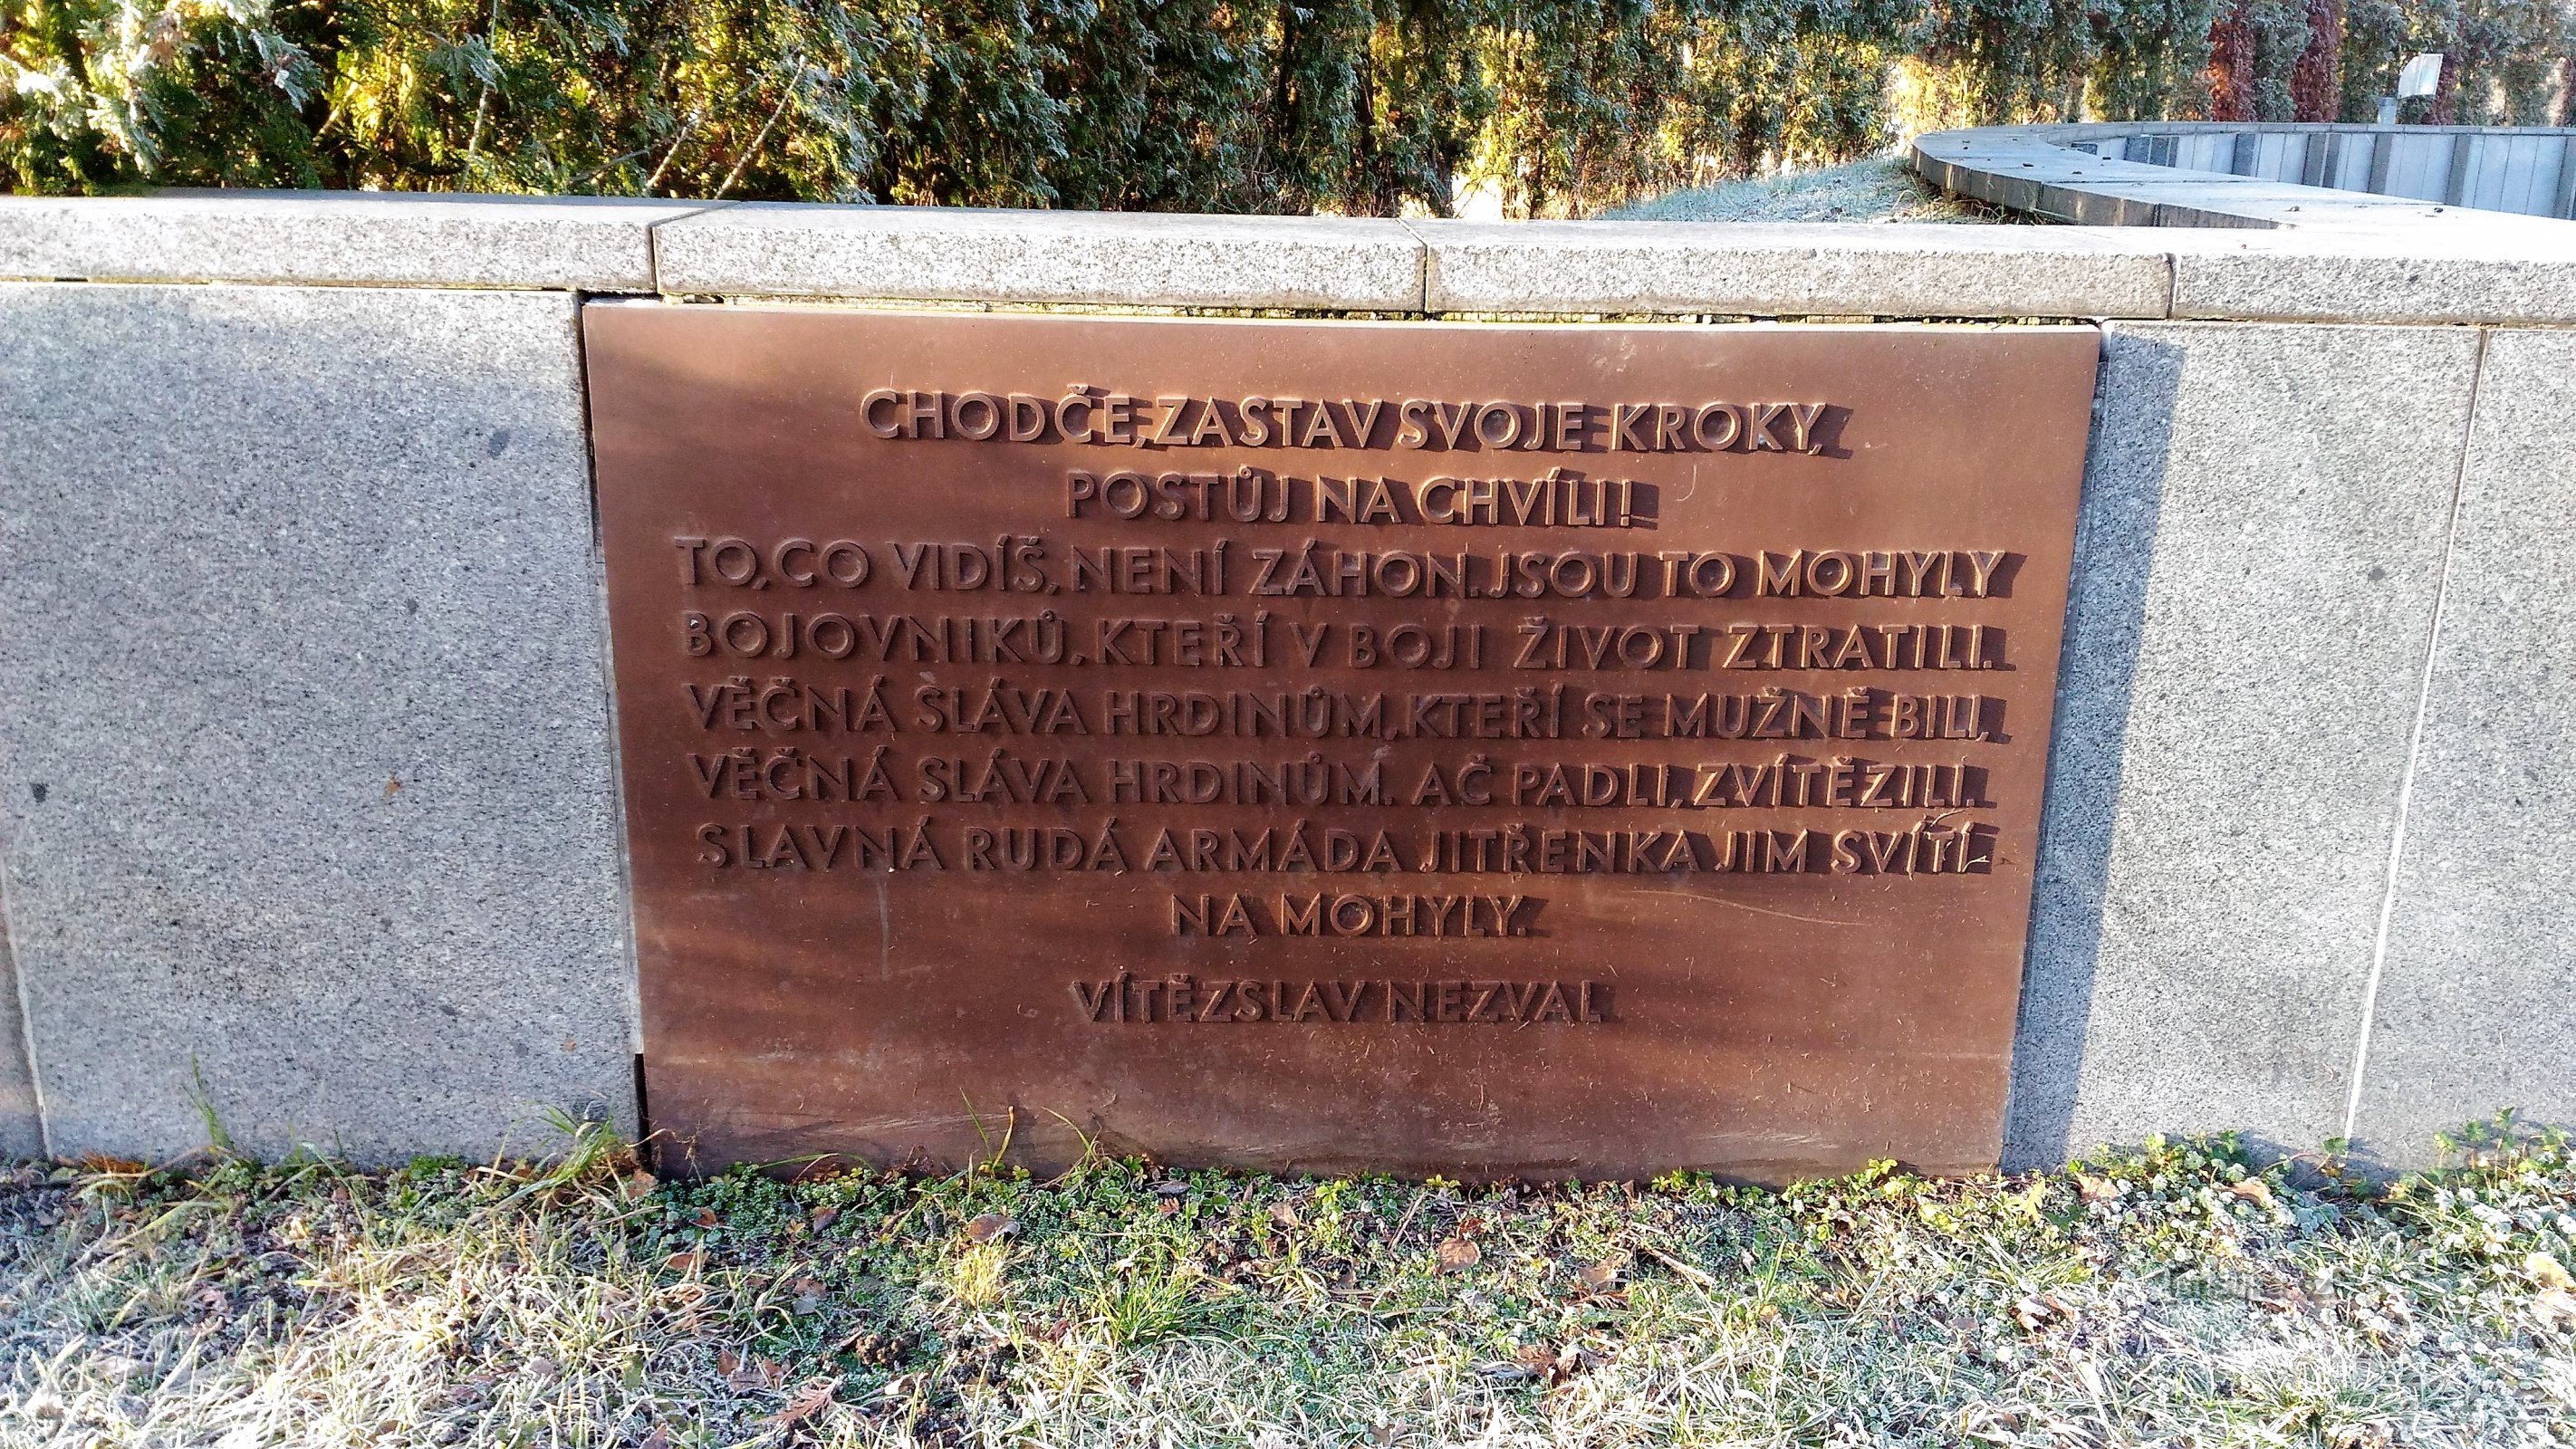 Sovjetiske soldaters kirkegård i Terezín.